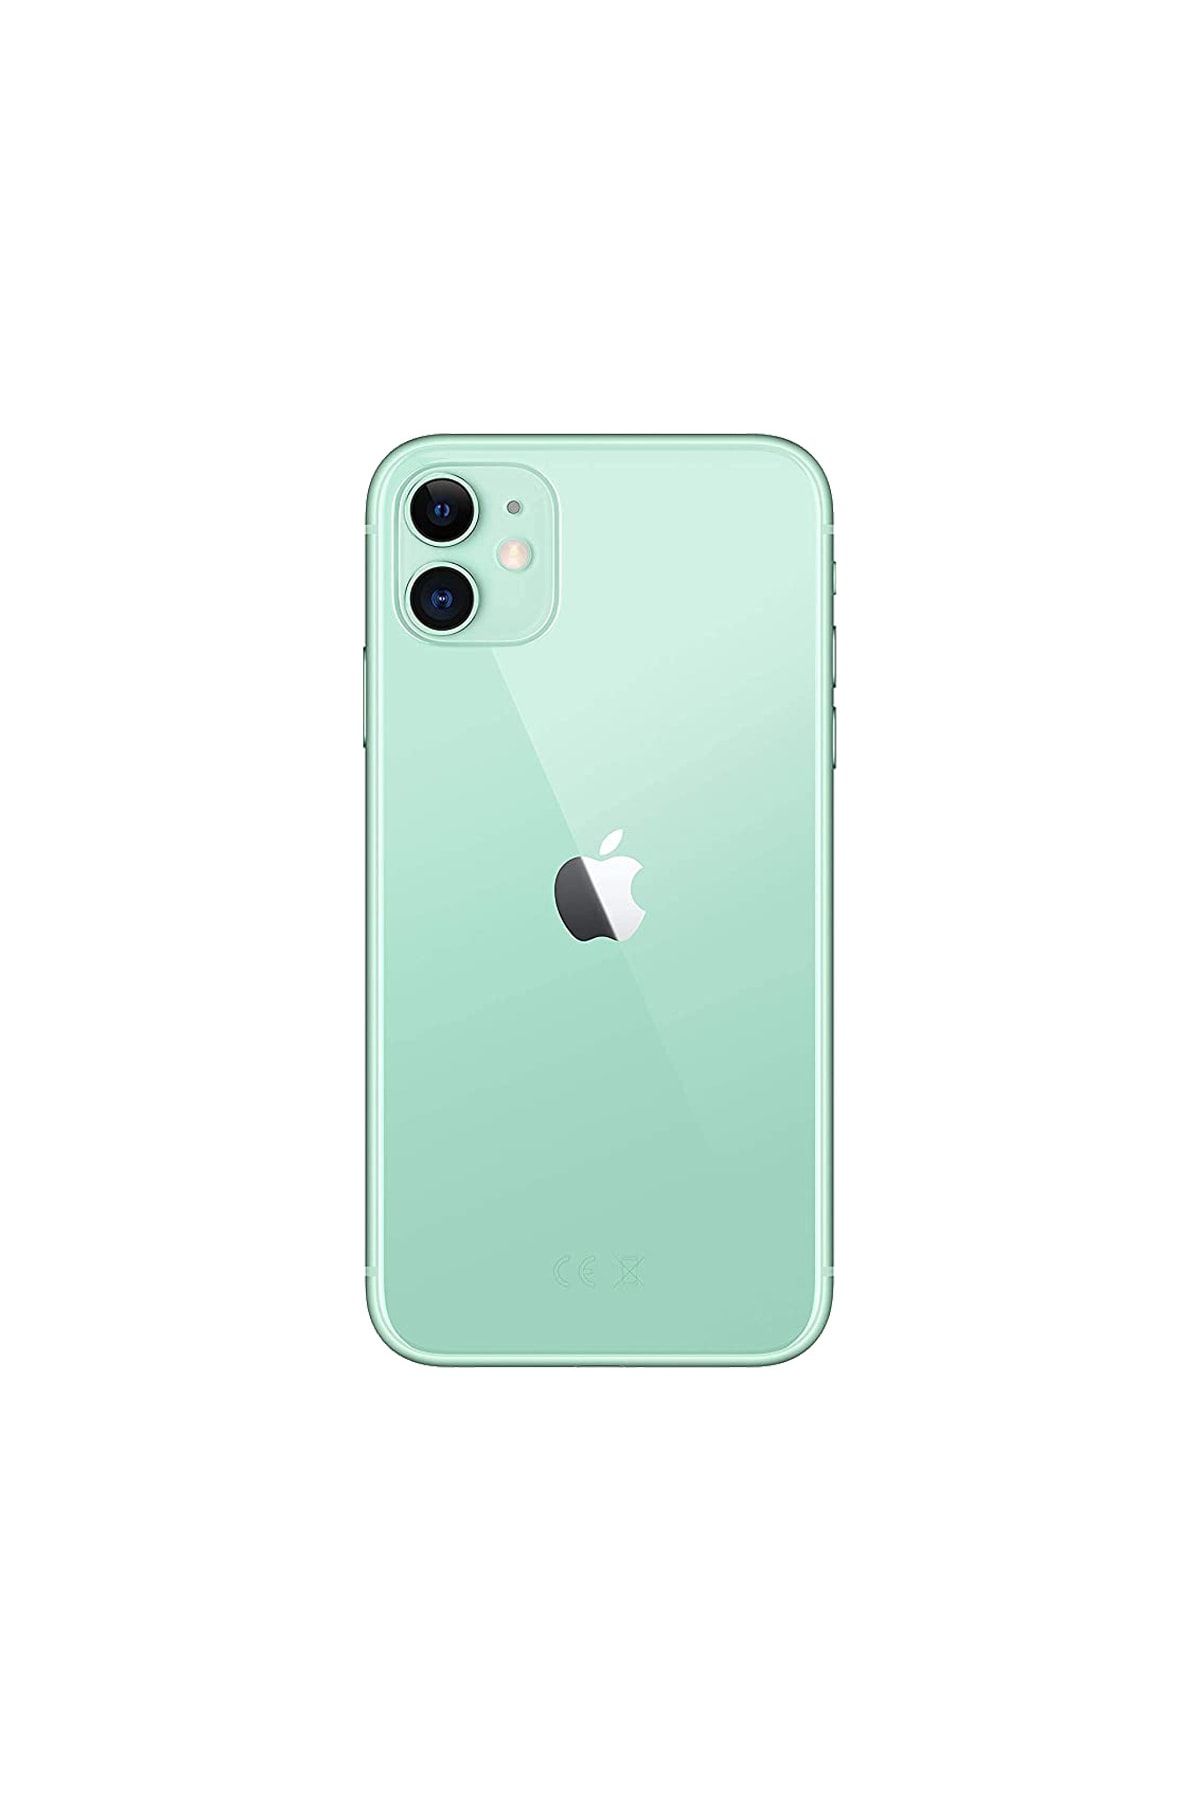 Apple Yenilenmiş iPhone 11 64 GB Yeşil Cep Telefonu (12 Ay Garantili) - A Kalite